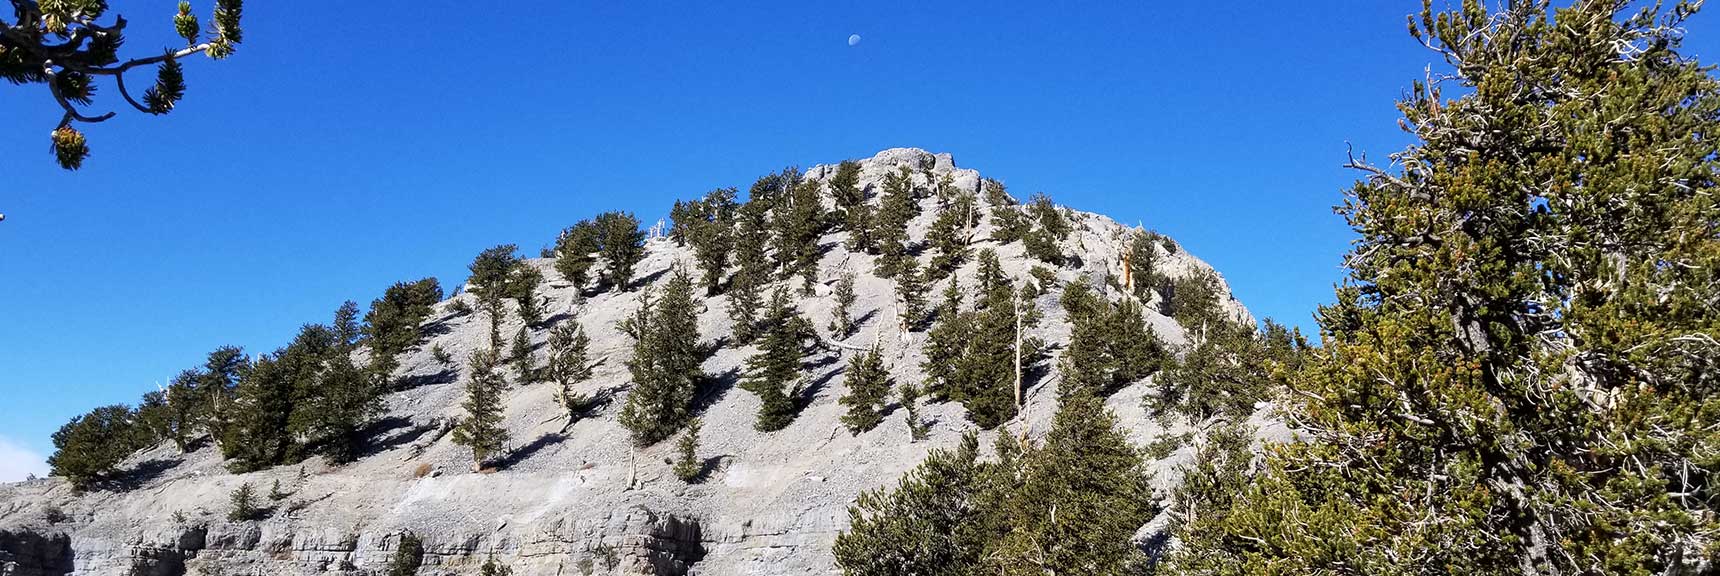 Lee Peak in Kyle Canyon, Spring Mountains, Nevada Slide 001